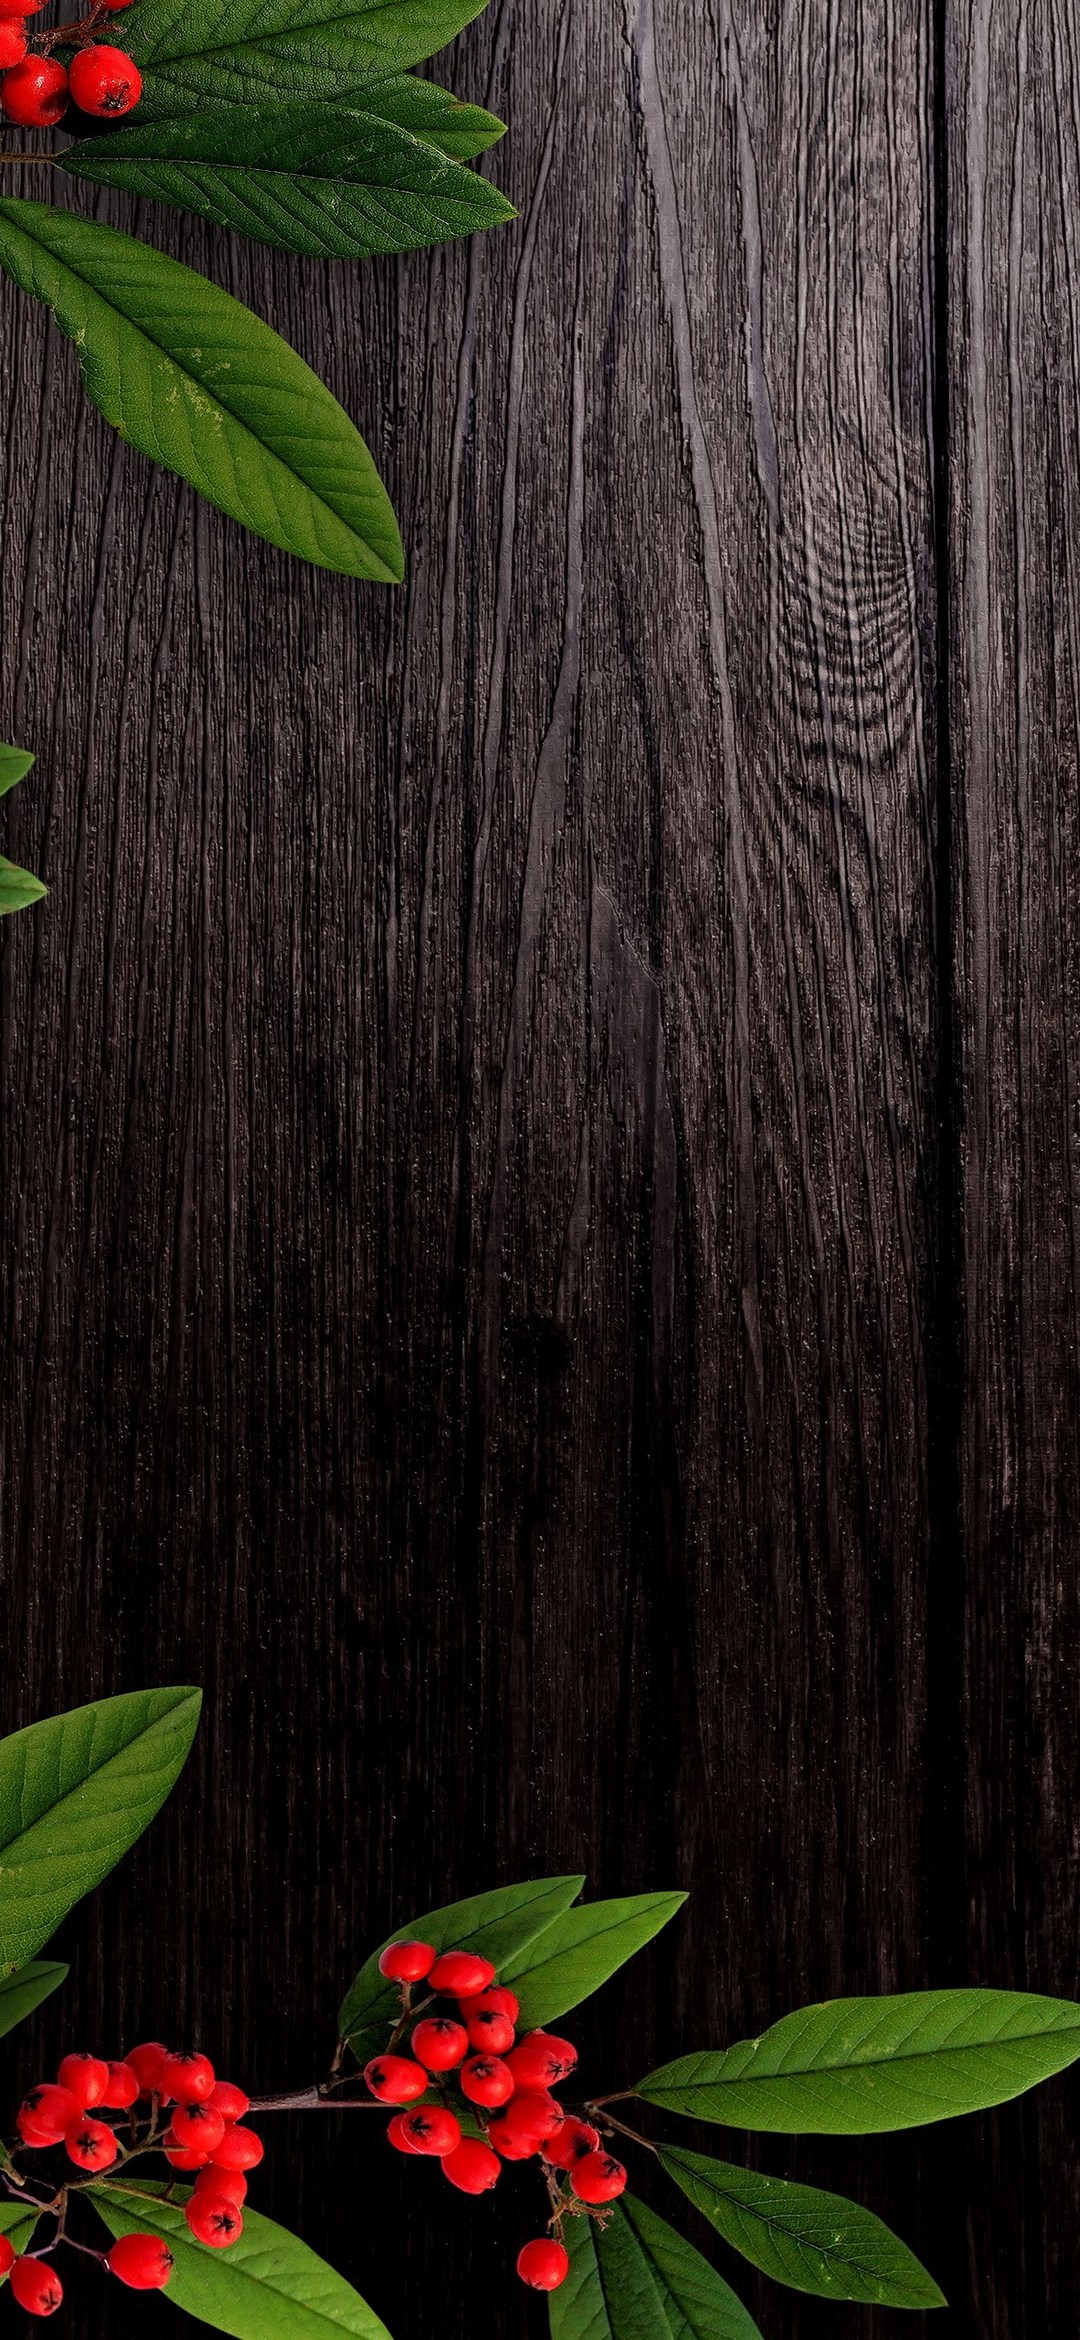 Brown Wooden Board Red Grass Redmi 9t Android スマホ壁紙 待ち受け スマラン